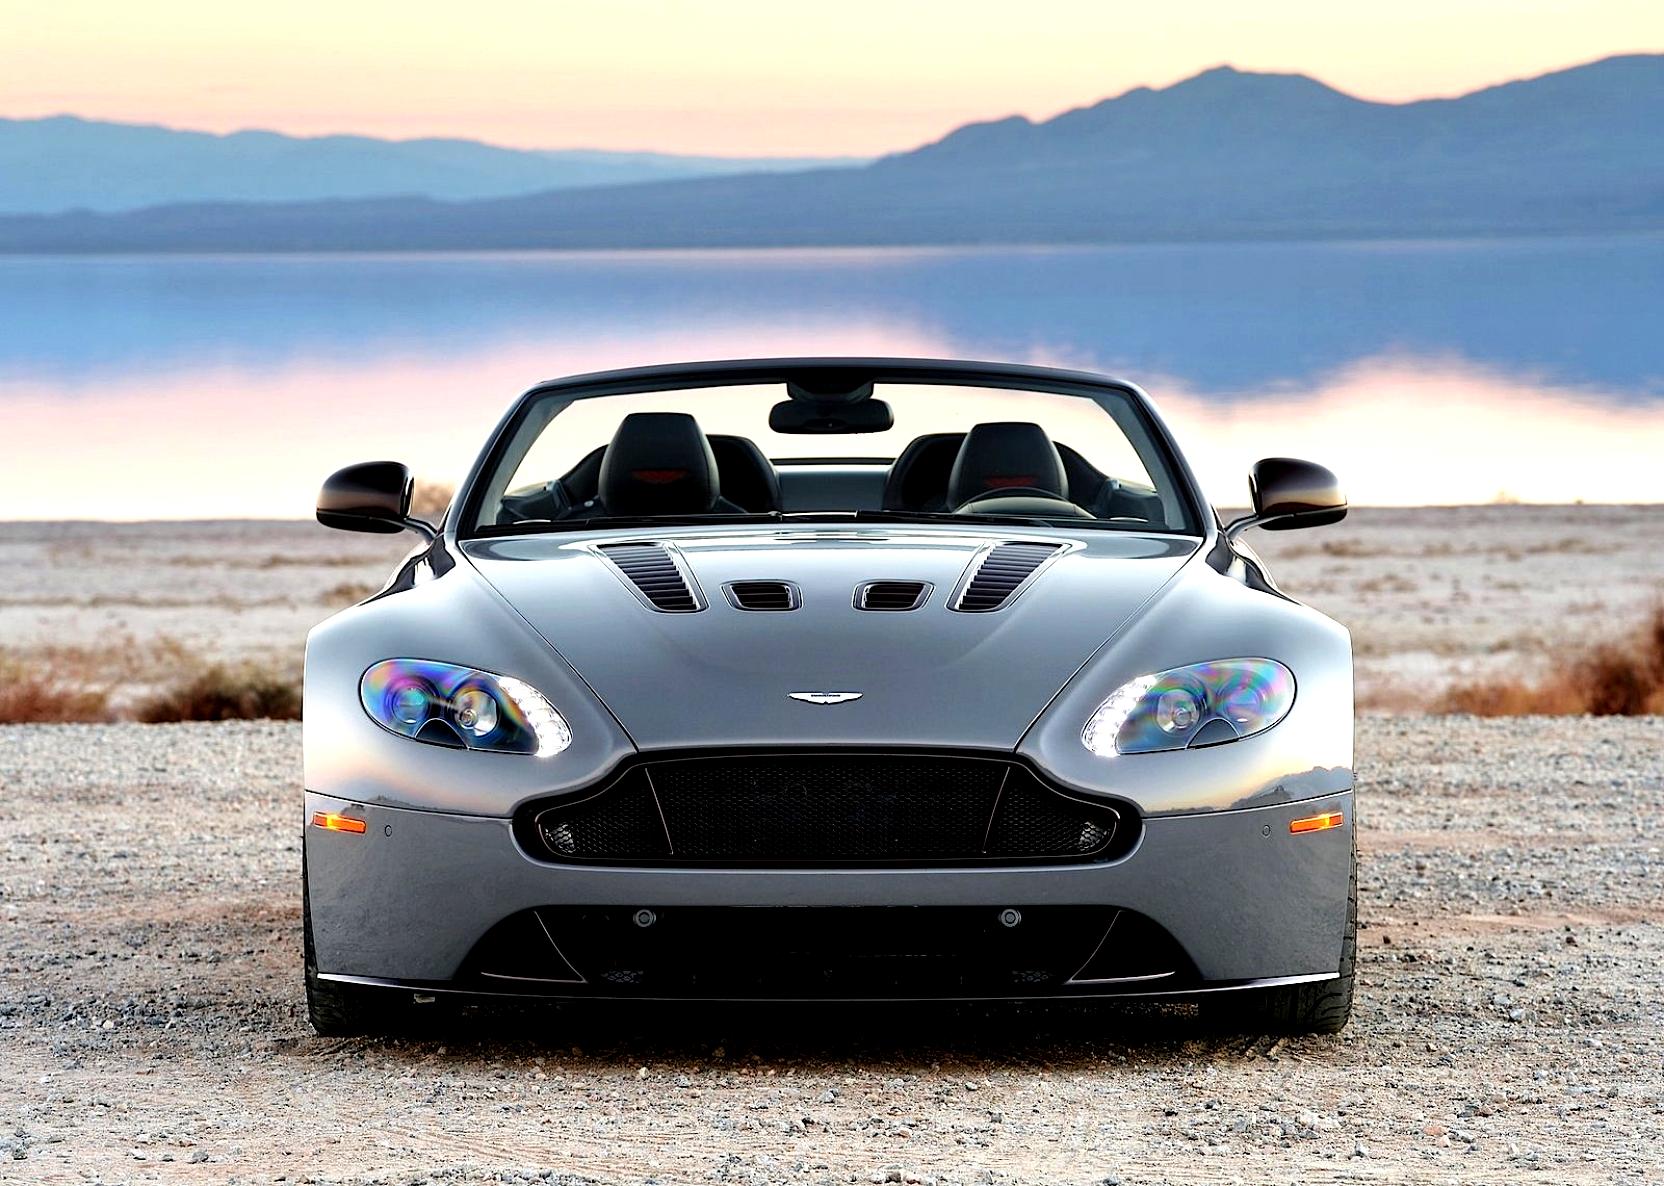 Aston Martin V12 Vantage S Roadster 2014 #36